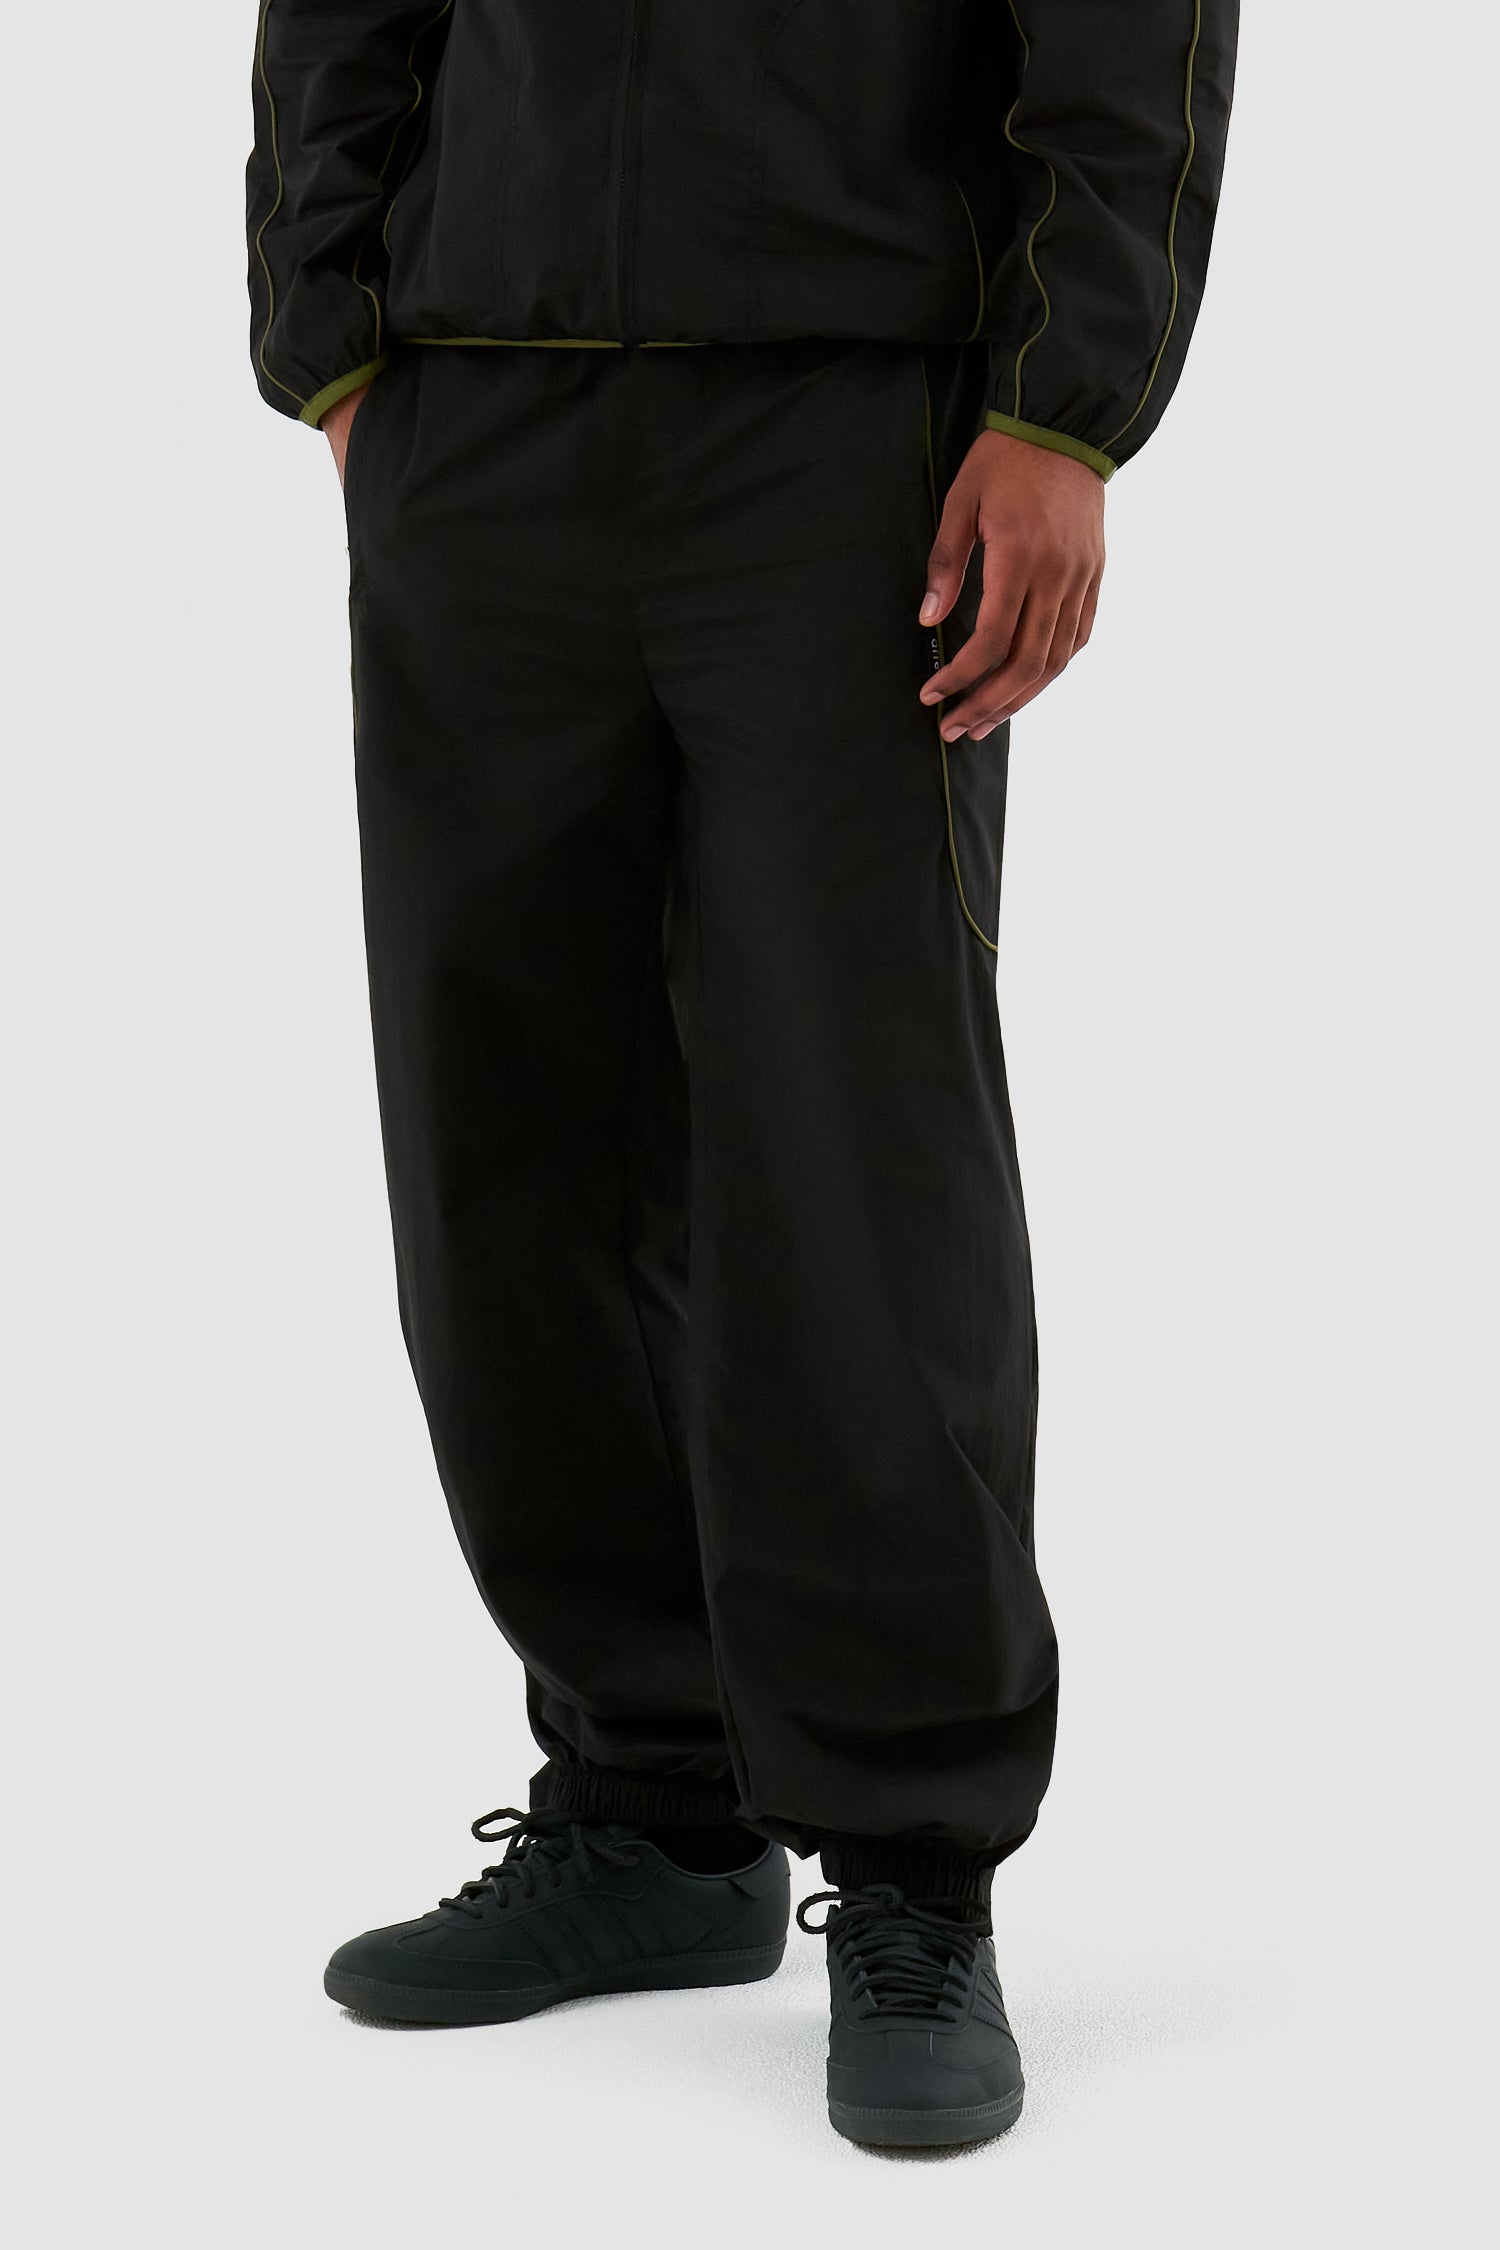 Jordan SS24 Pants - Black/Green